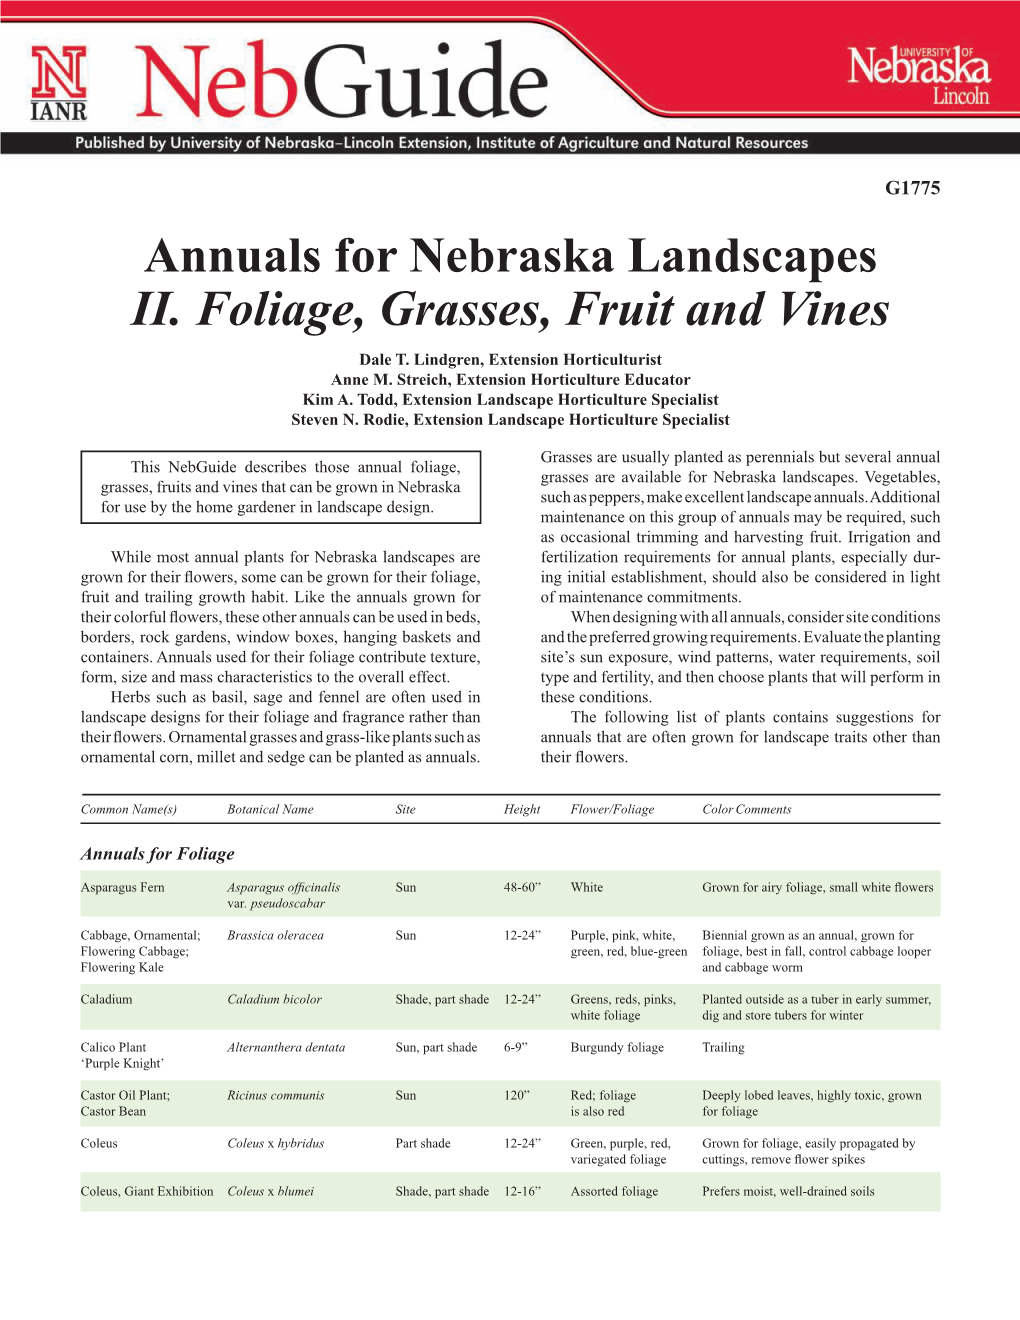 Annuals for Nebraska Landscapes II. Foliage, Grasses, Fruit and Vines Dale T